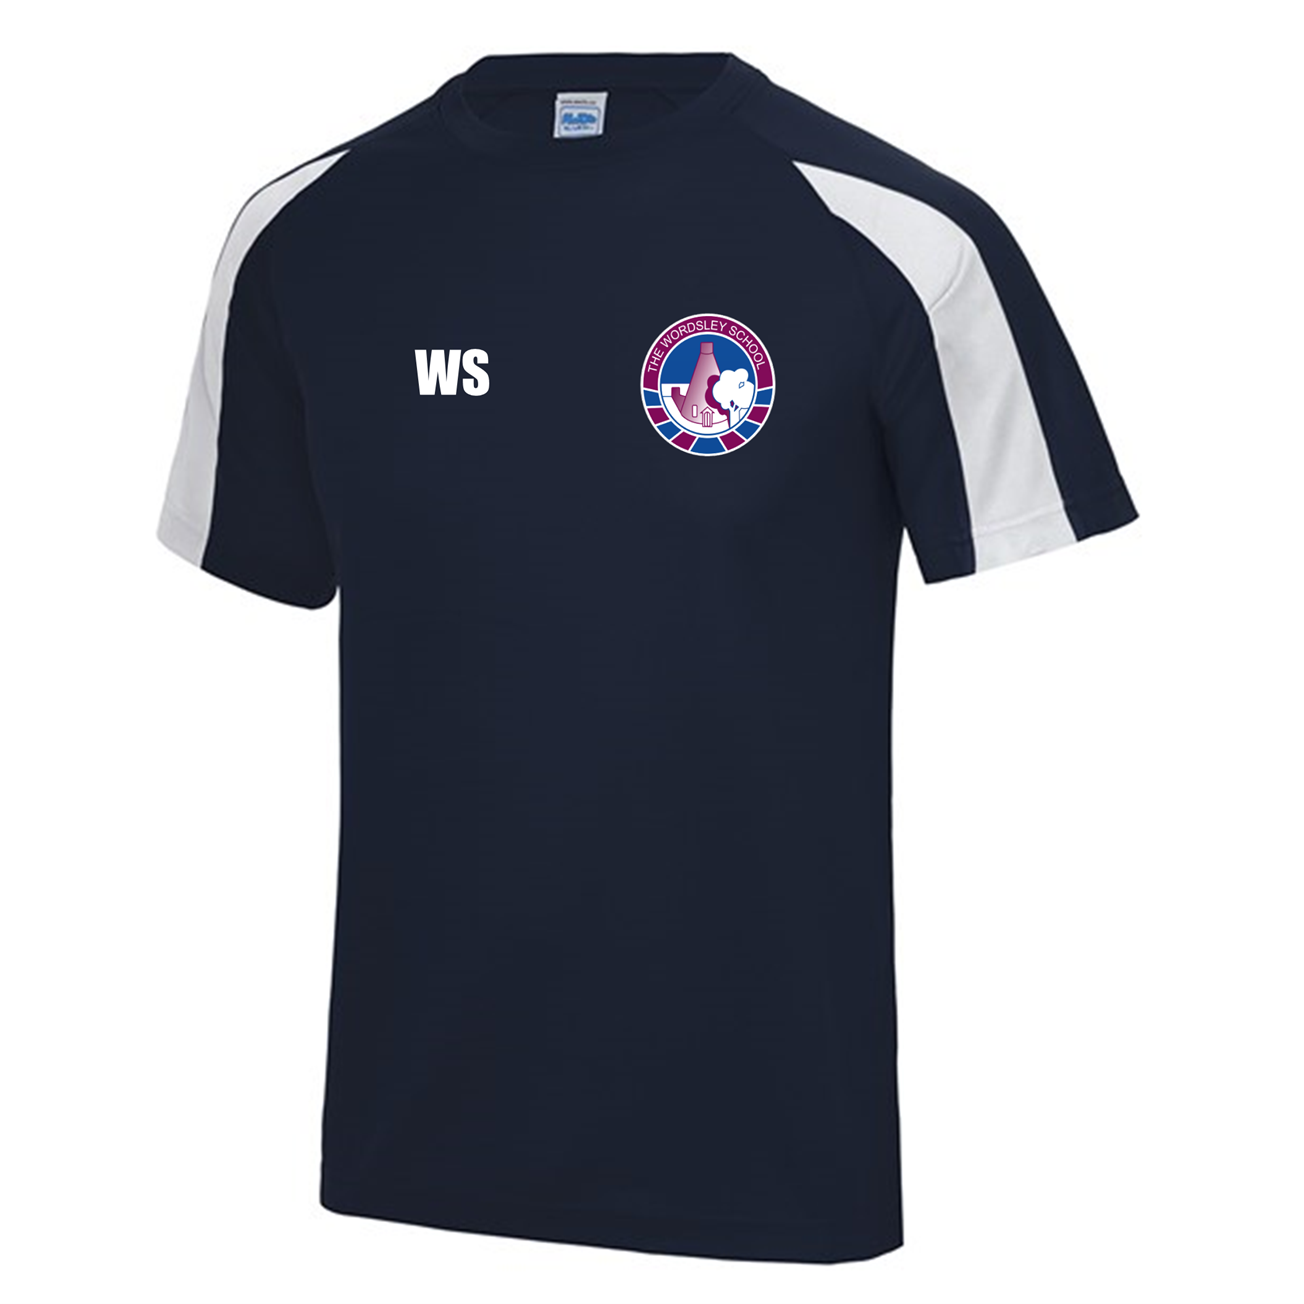 The Wordsley School P.E. T-Shirt [TWS]